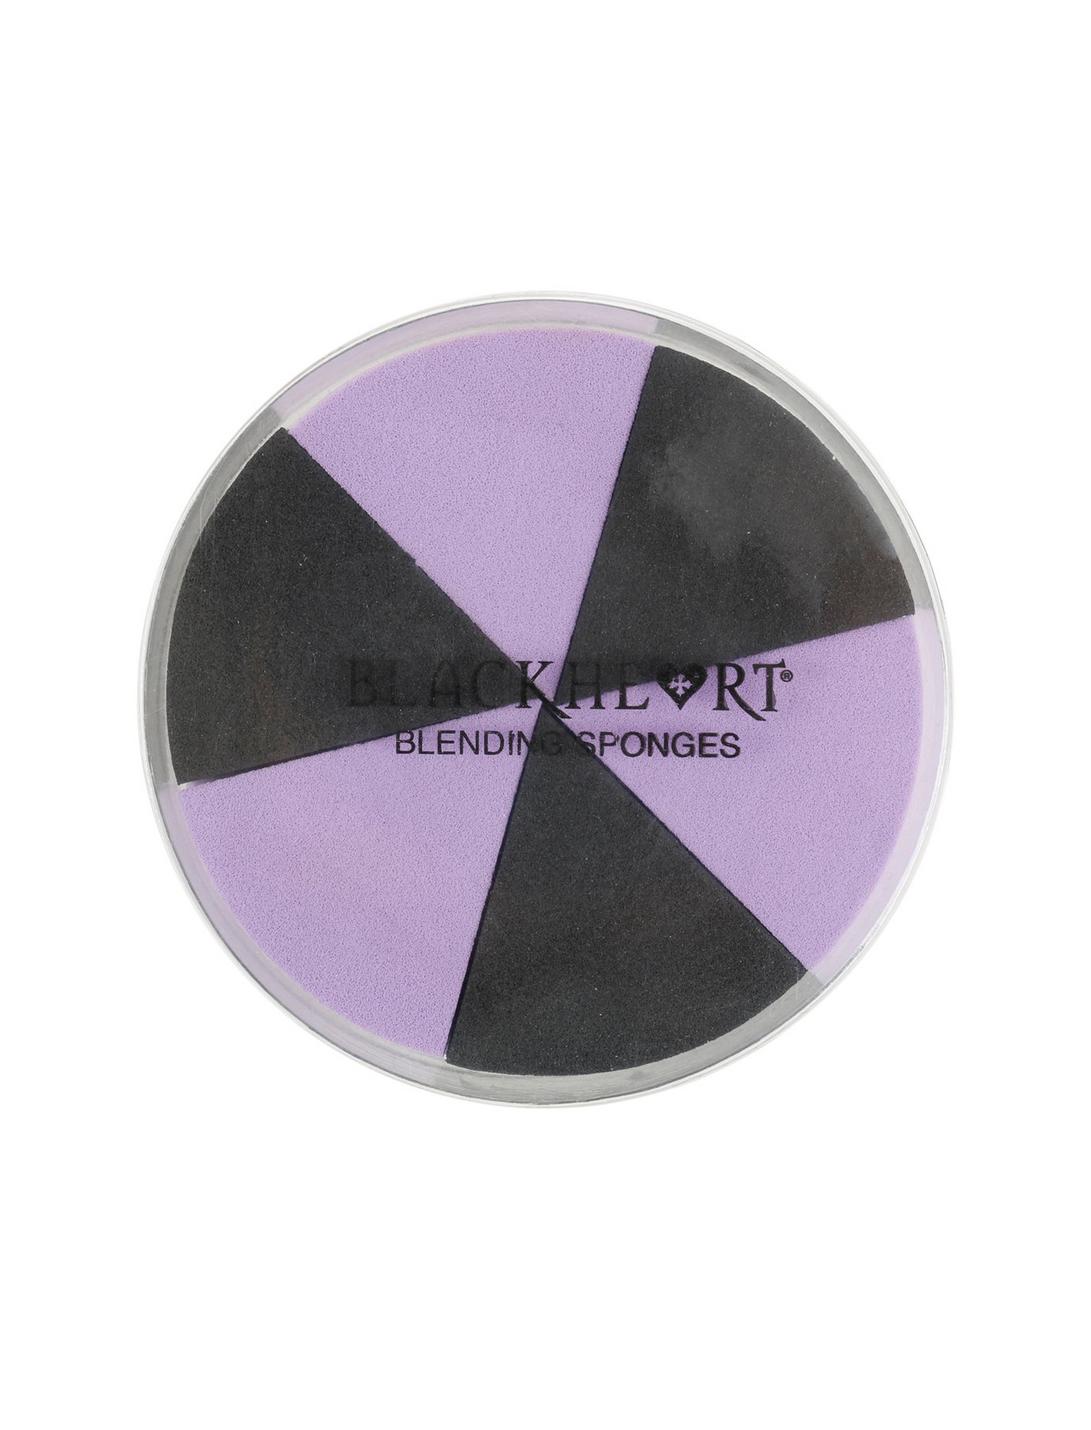 Blackheart Purple & Black Blending Wedges 6 Pack, , hi-res